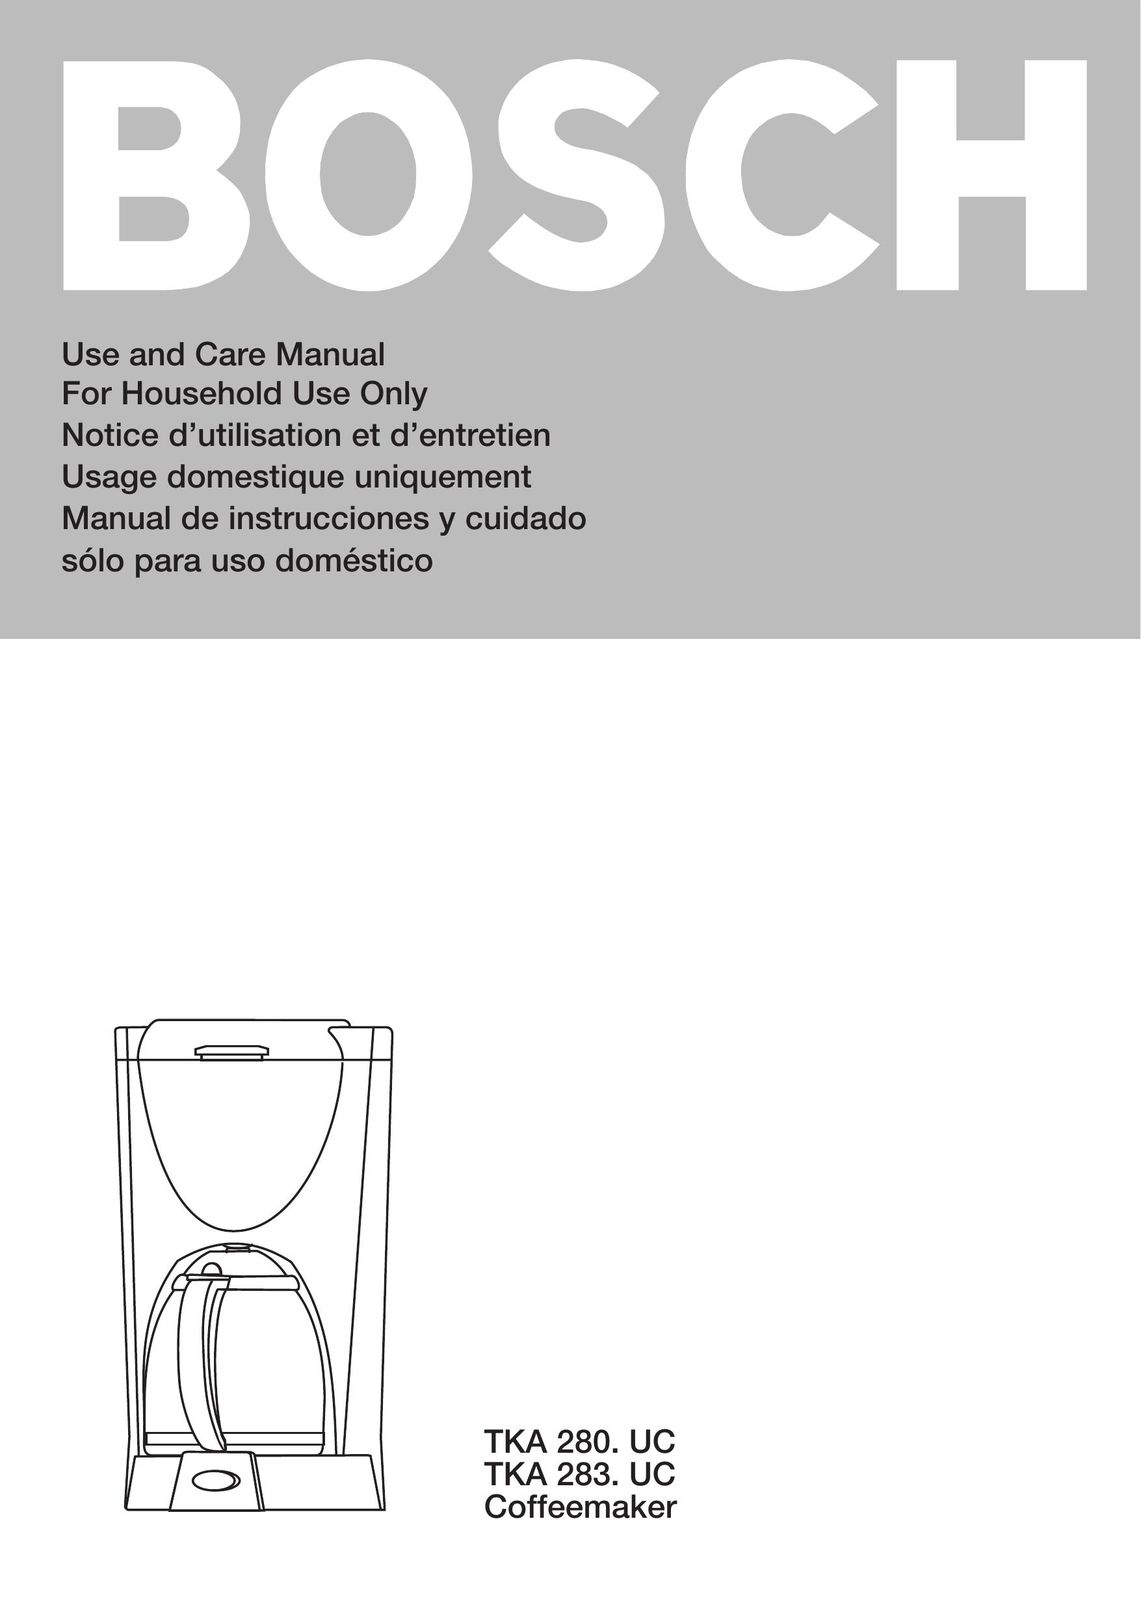 Bosch Appliances 283UC Coffeemaker User Manual